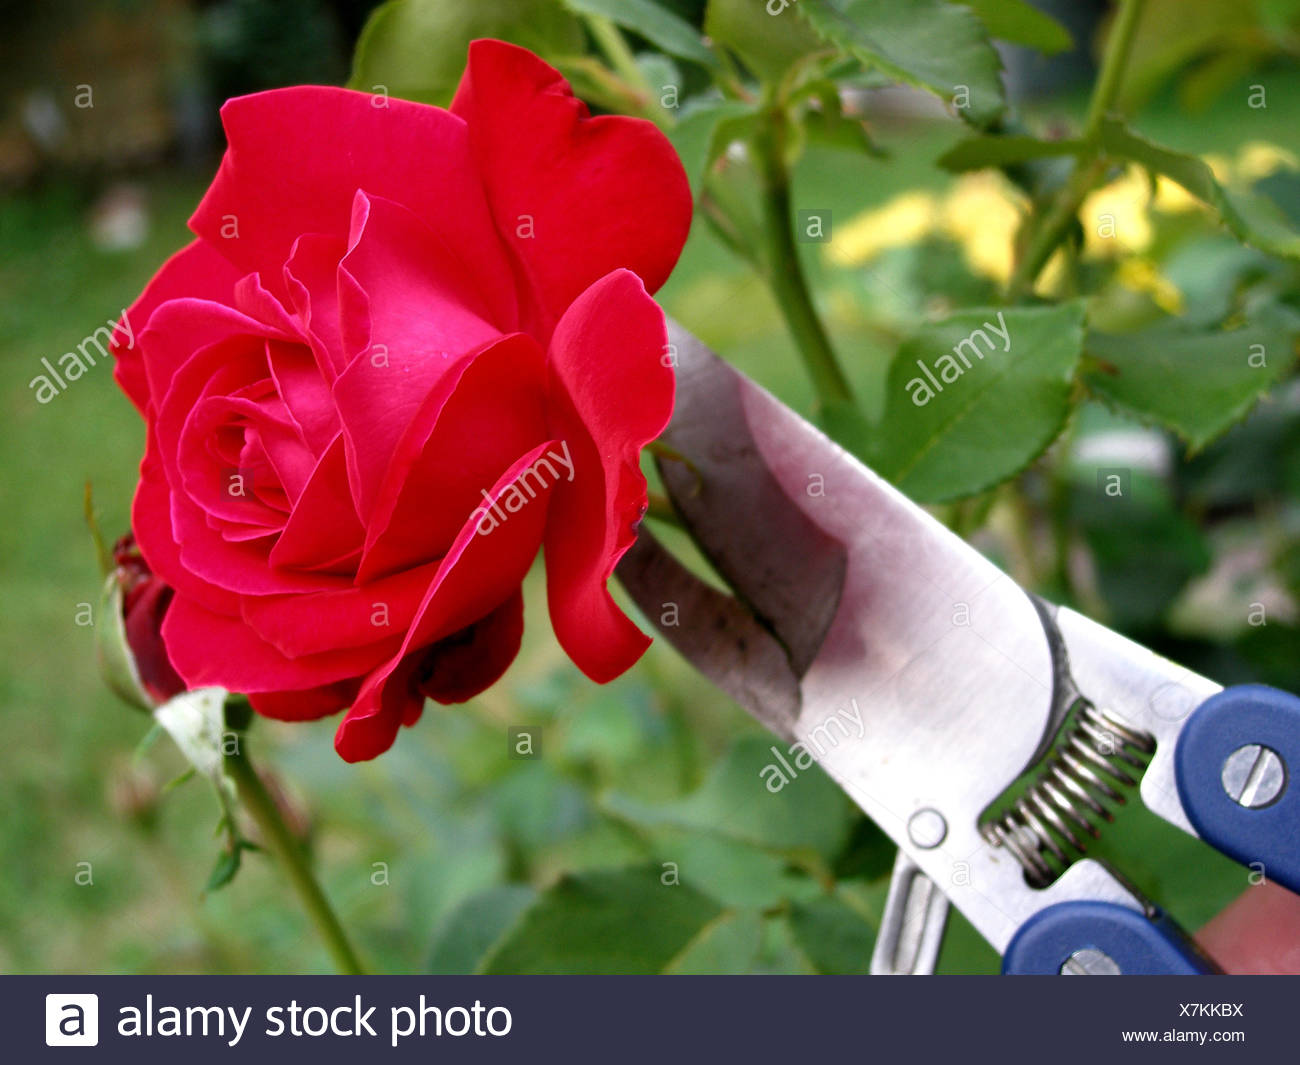 Flower Rose Plant Gardener Gardening Market Garden Cut Back Secateurs Secateur Stock Photo Alamy